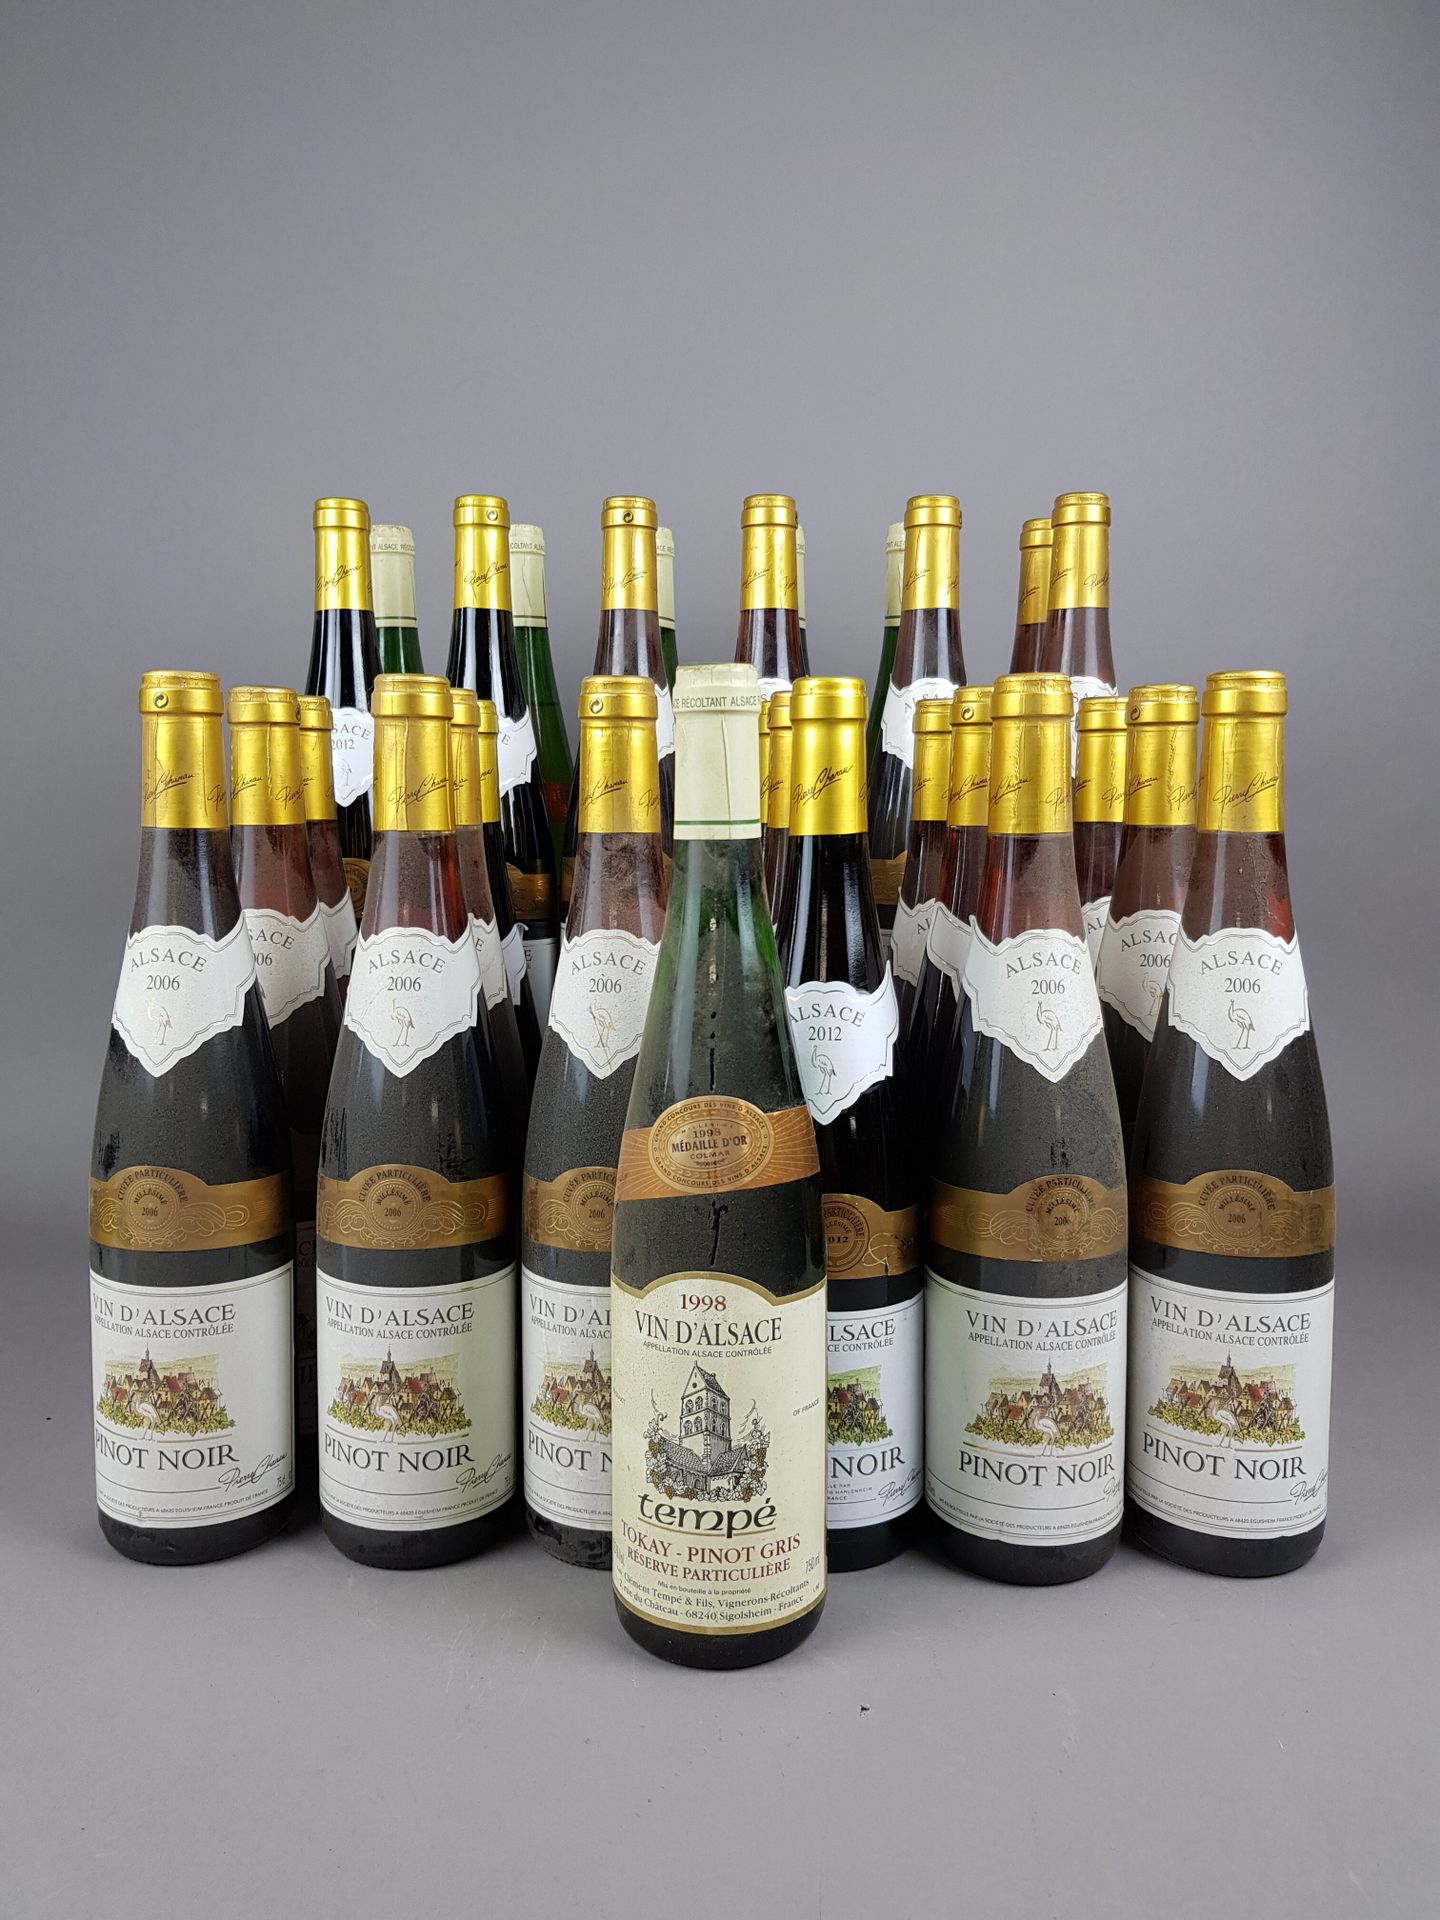 Null 19瓶阿尔萨斯葡萄酒：
- 6瓶黑皮诺，来自Eguisheim合作酒庄，2012年
- 7瓶黑皮诺，来自Eguisheim合作酒厂，2006年
- 6&hellip;